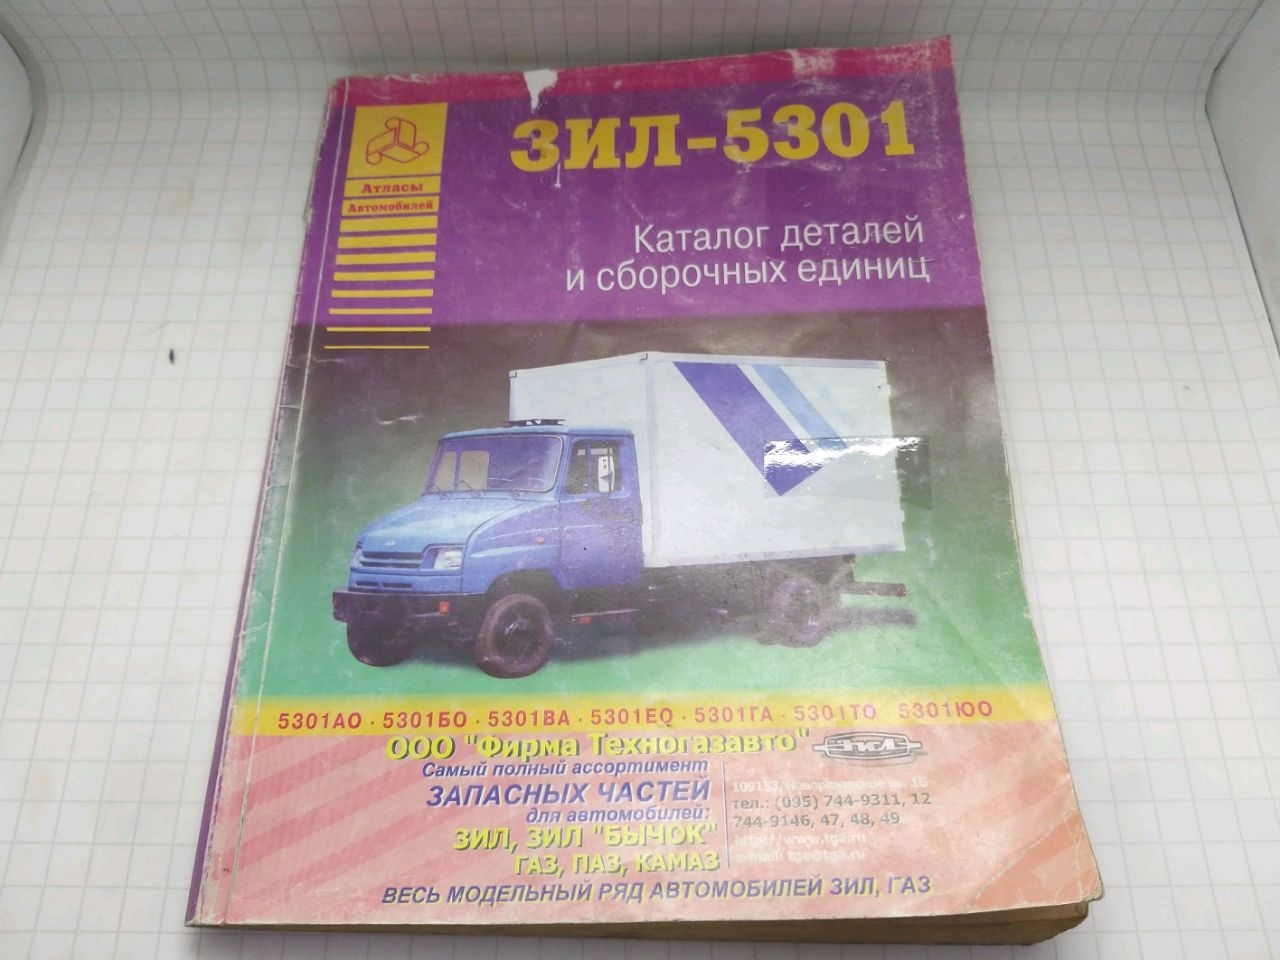 Catalog ZIL-5301